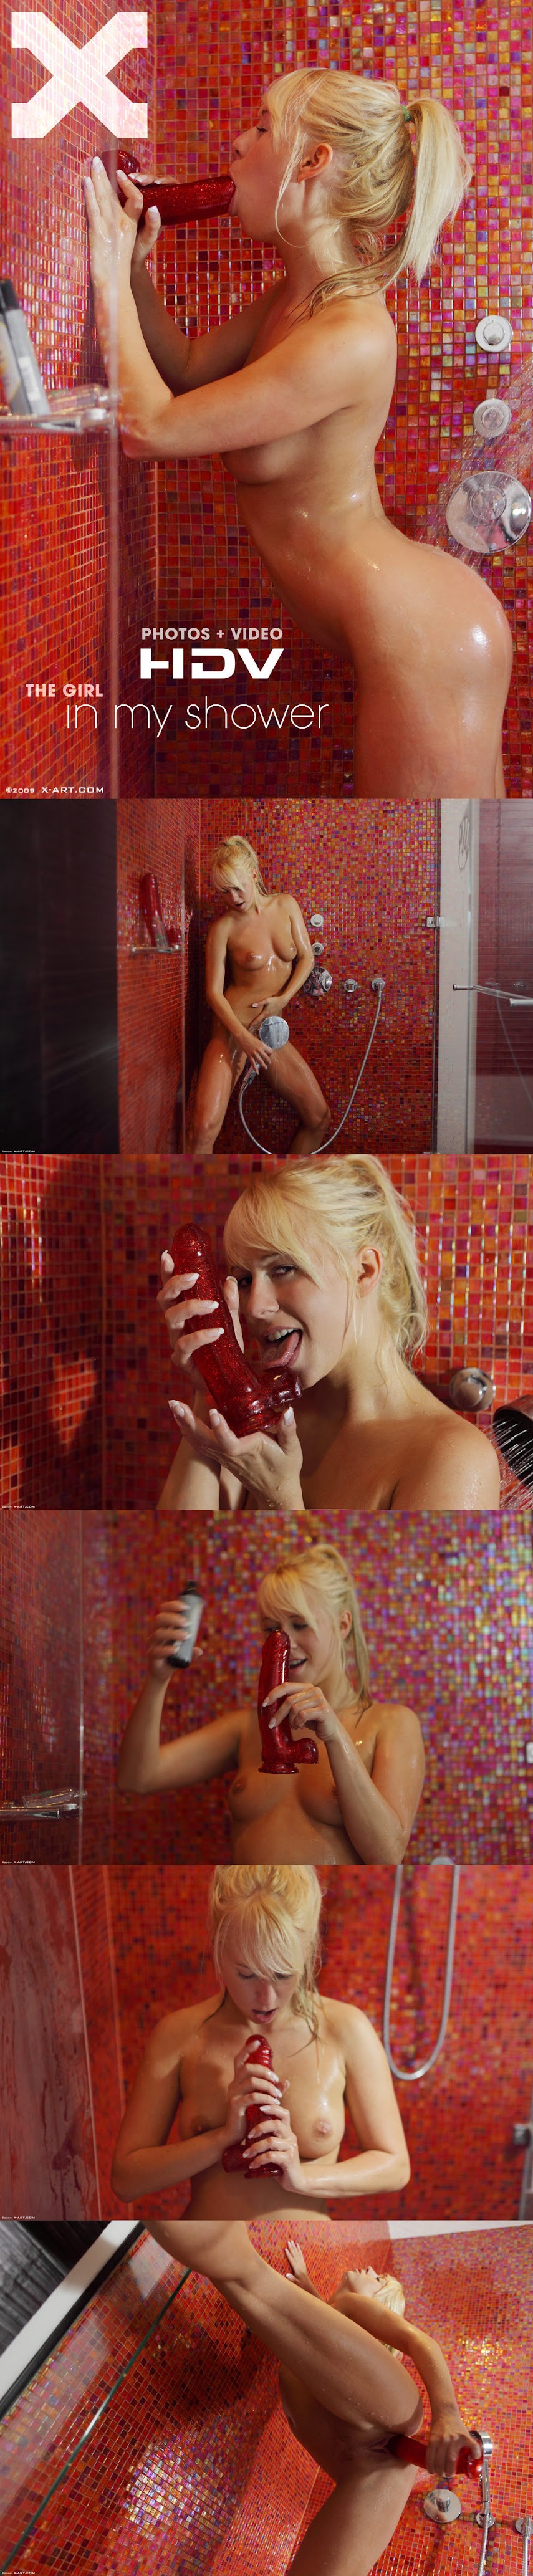 x-art_carla_the_girl_in_my_shower-lrg.zip-jk- x-art carla the girl in my shower-lrg